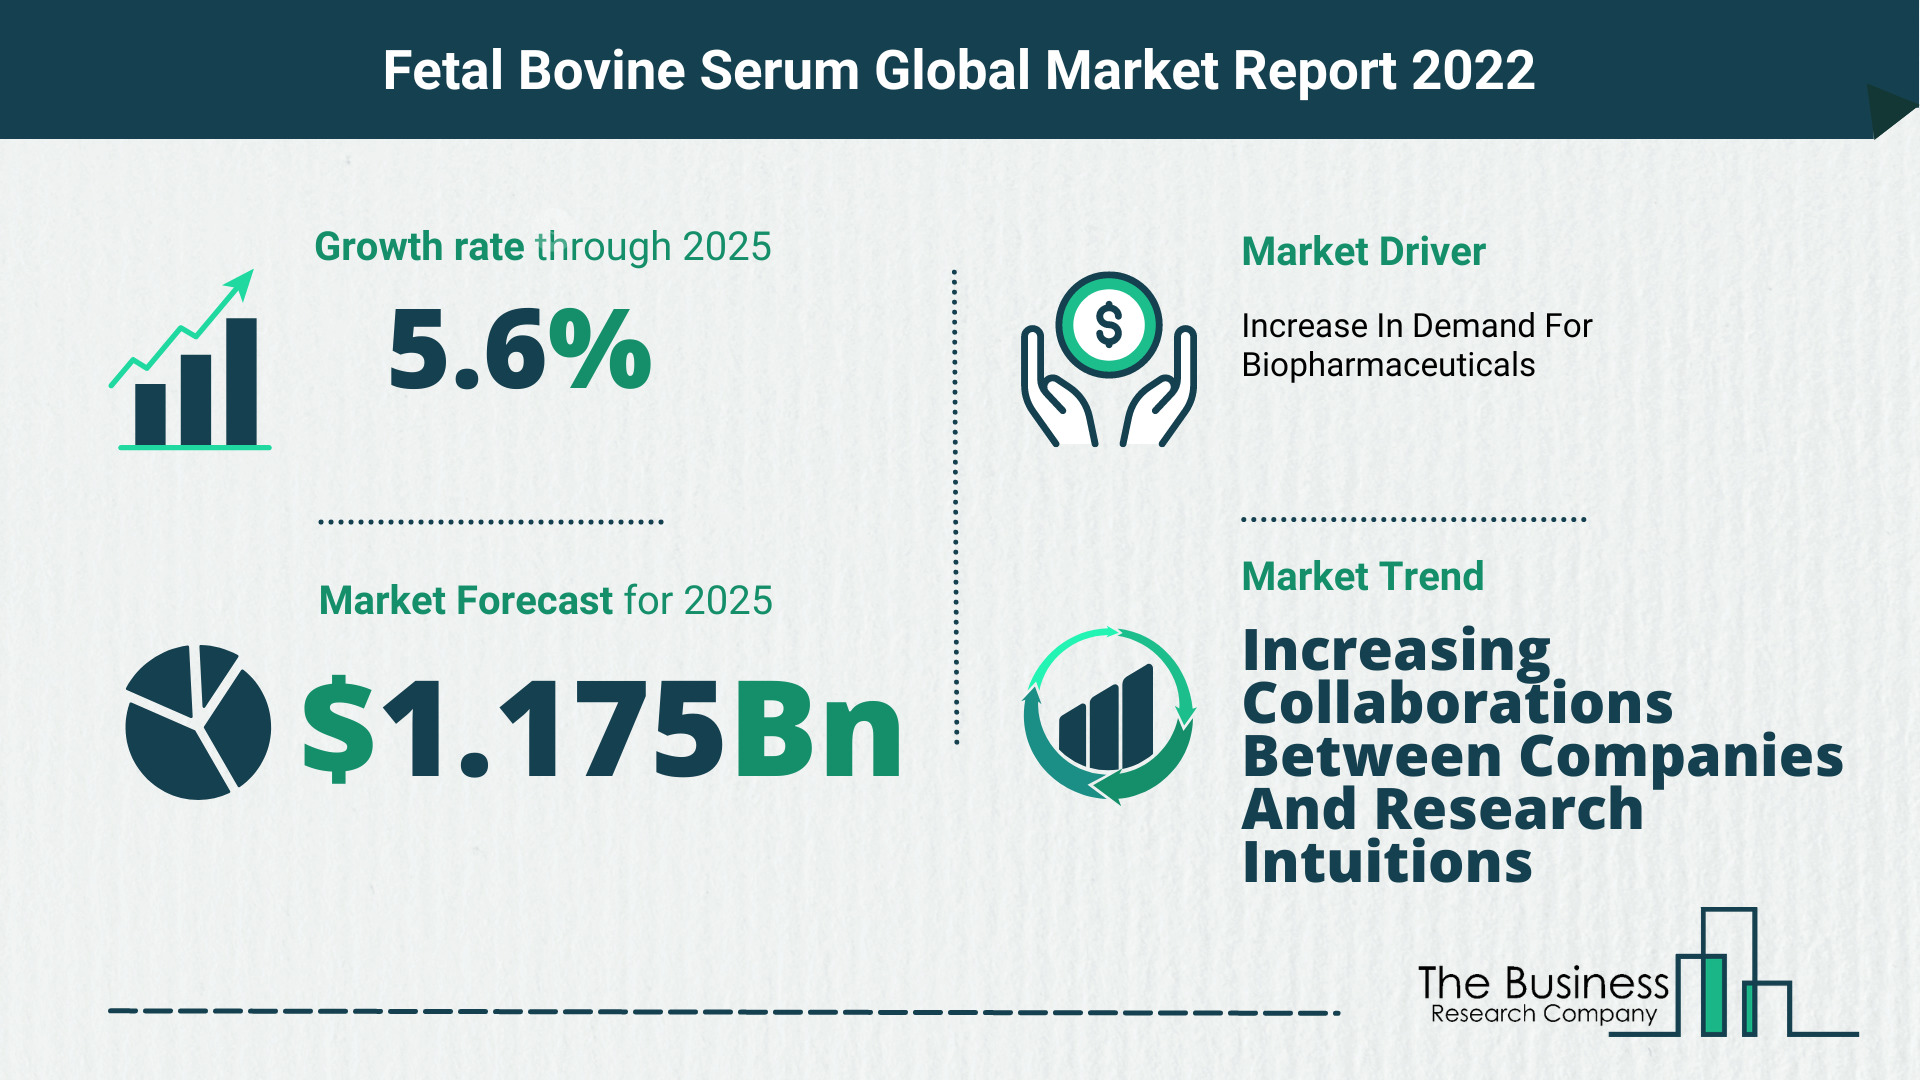 How Will The Fetal Bovine Serum Market Grow In 2022?